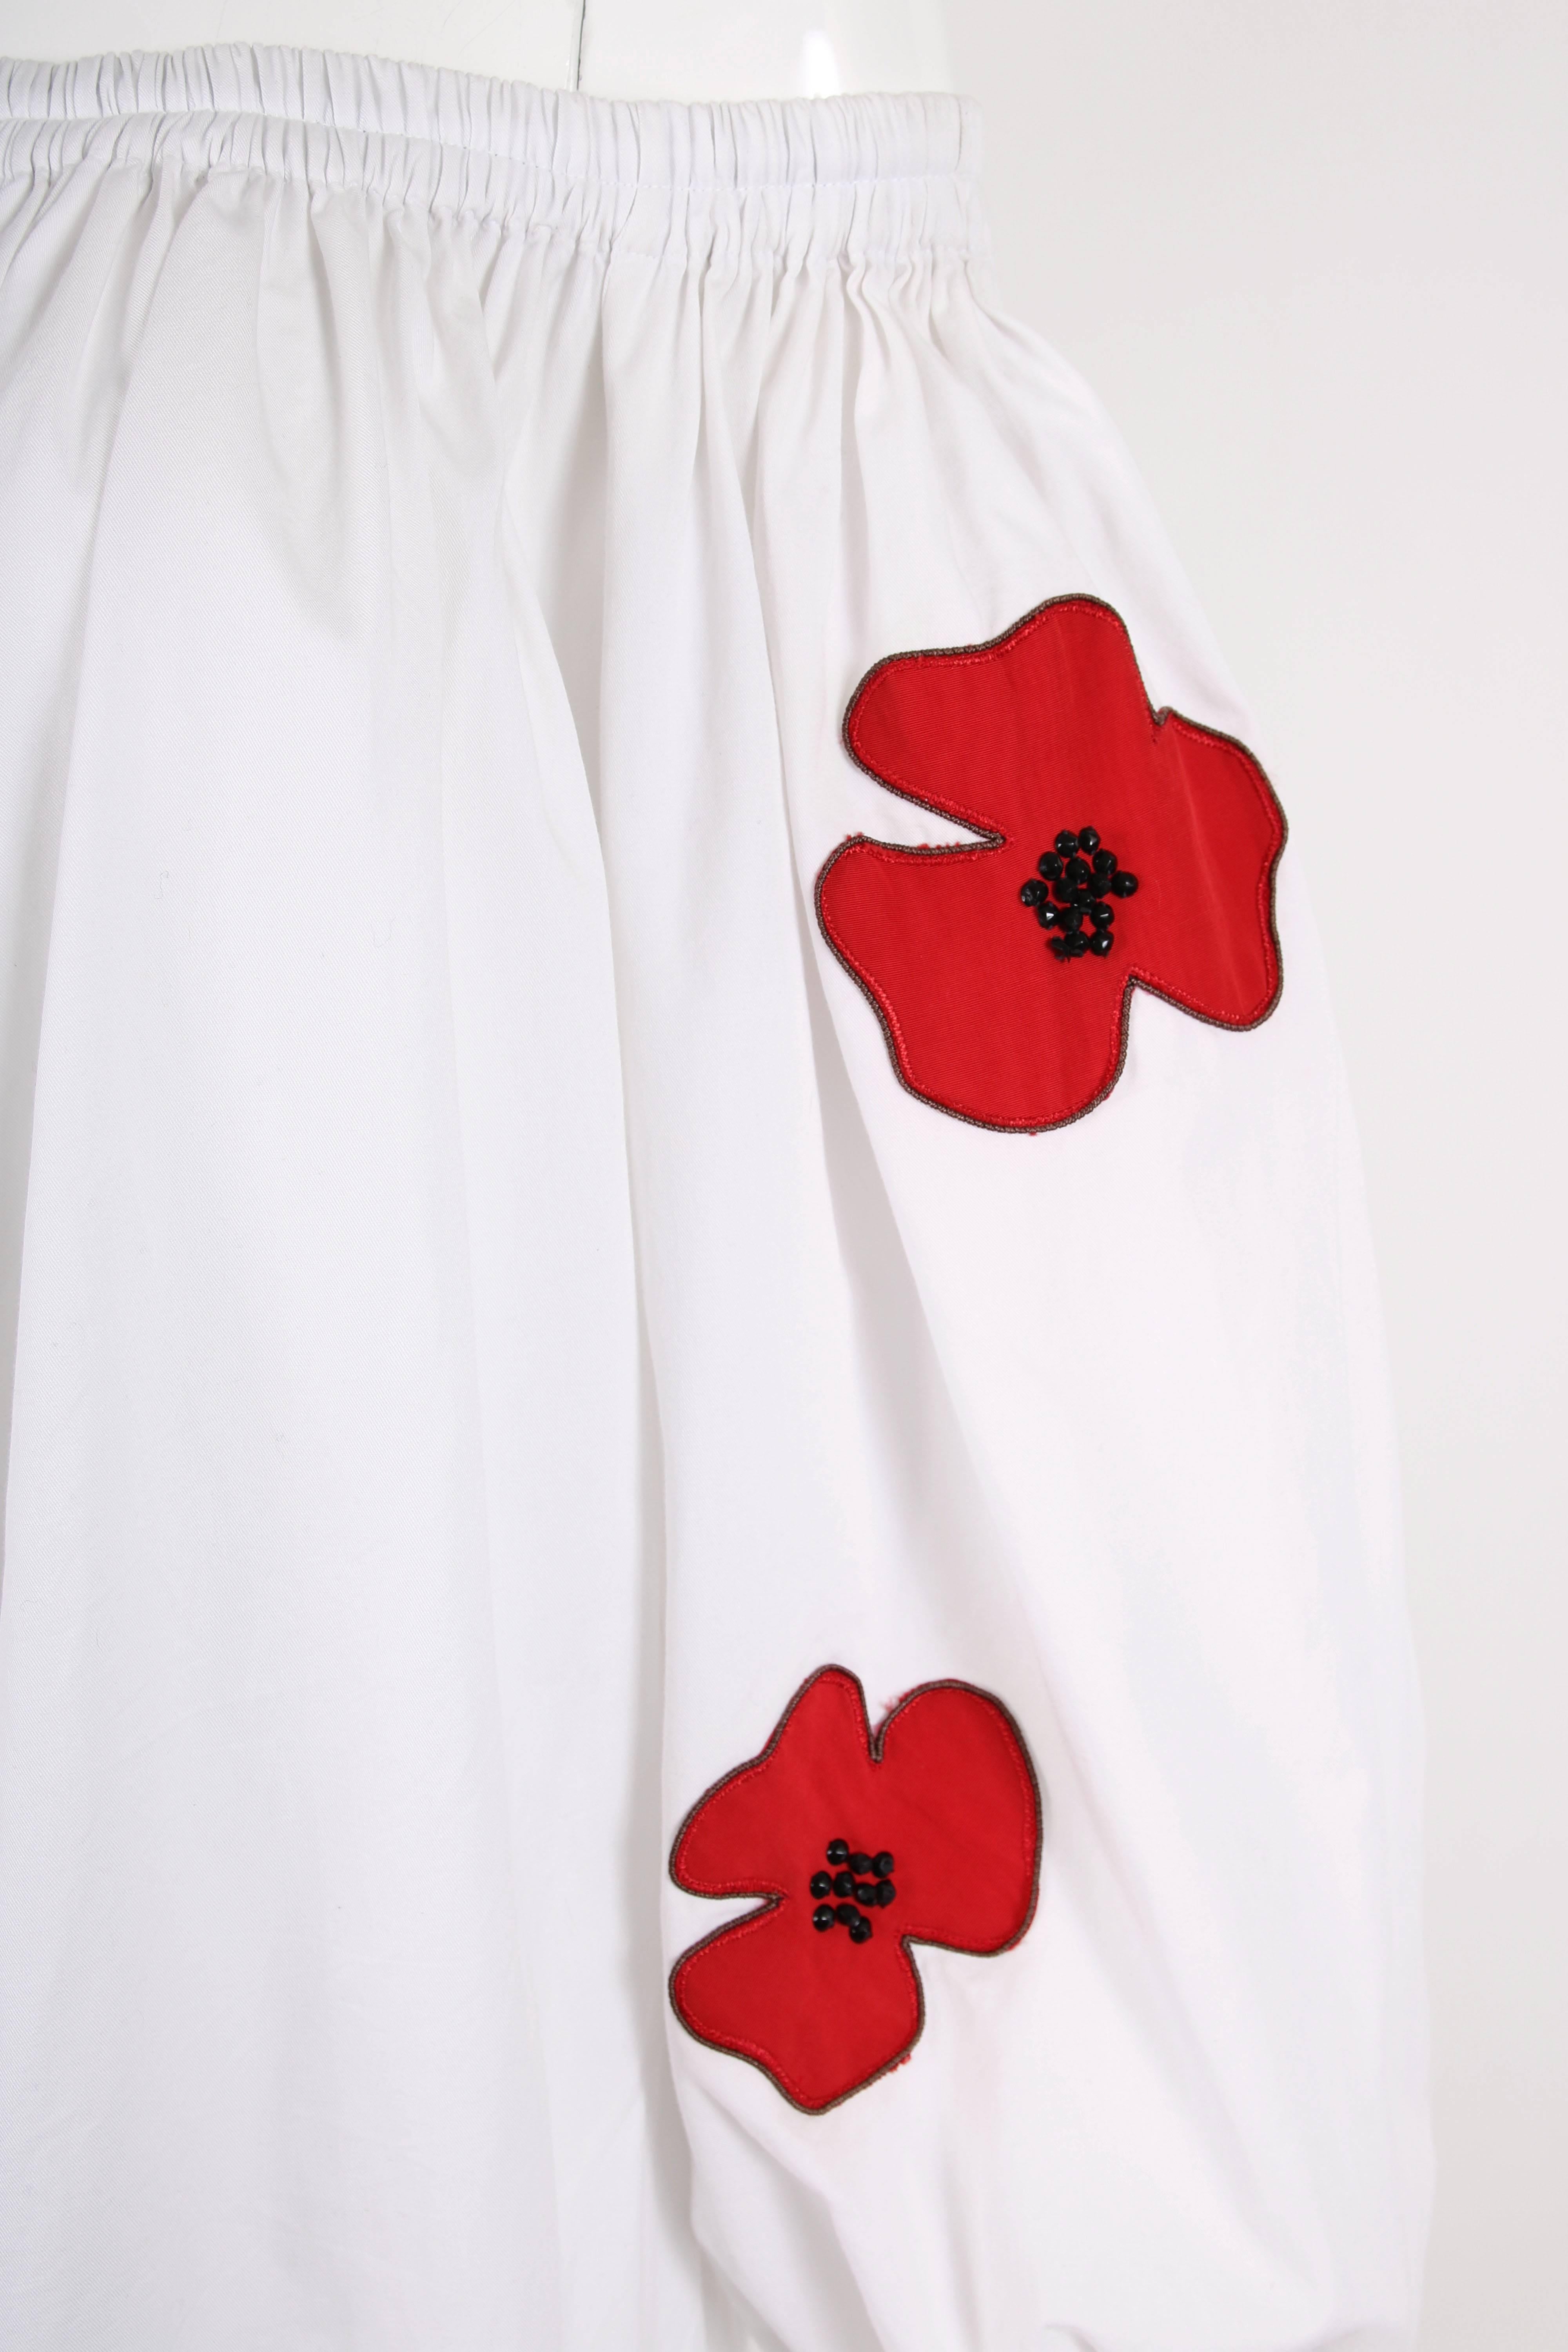 Yves Saint Laurent YSL White Cotton Asymmetric Dress with Poppies 1